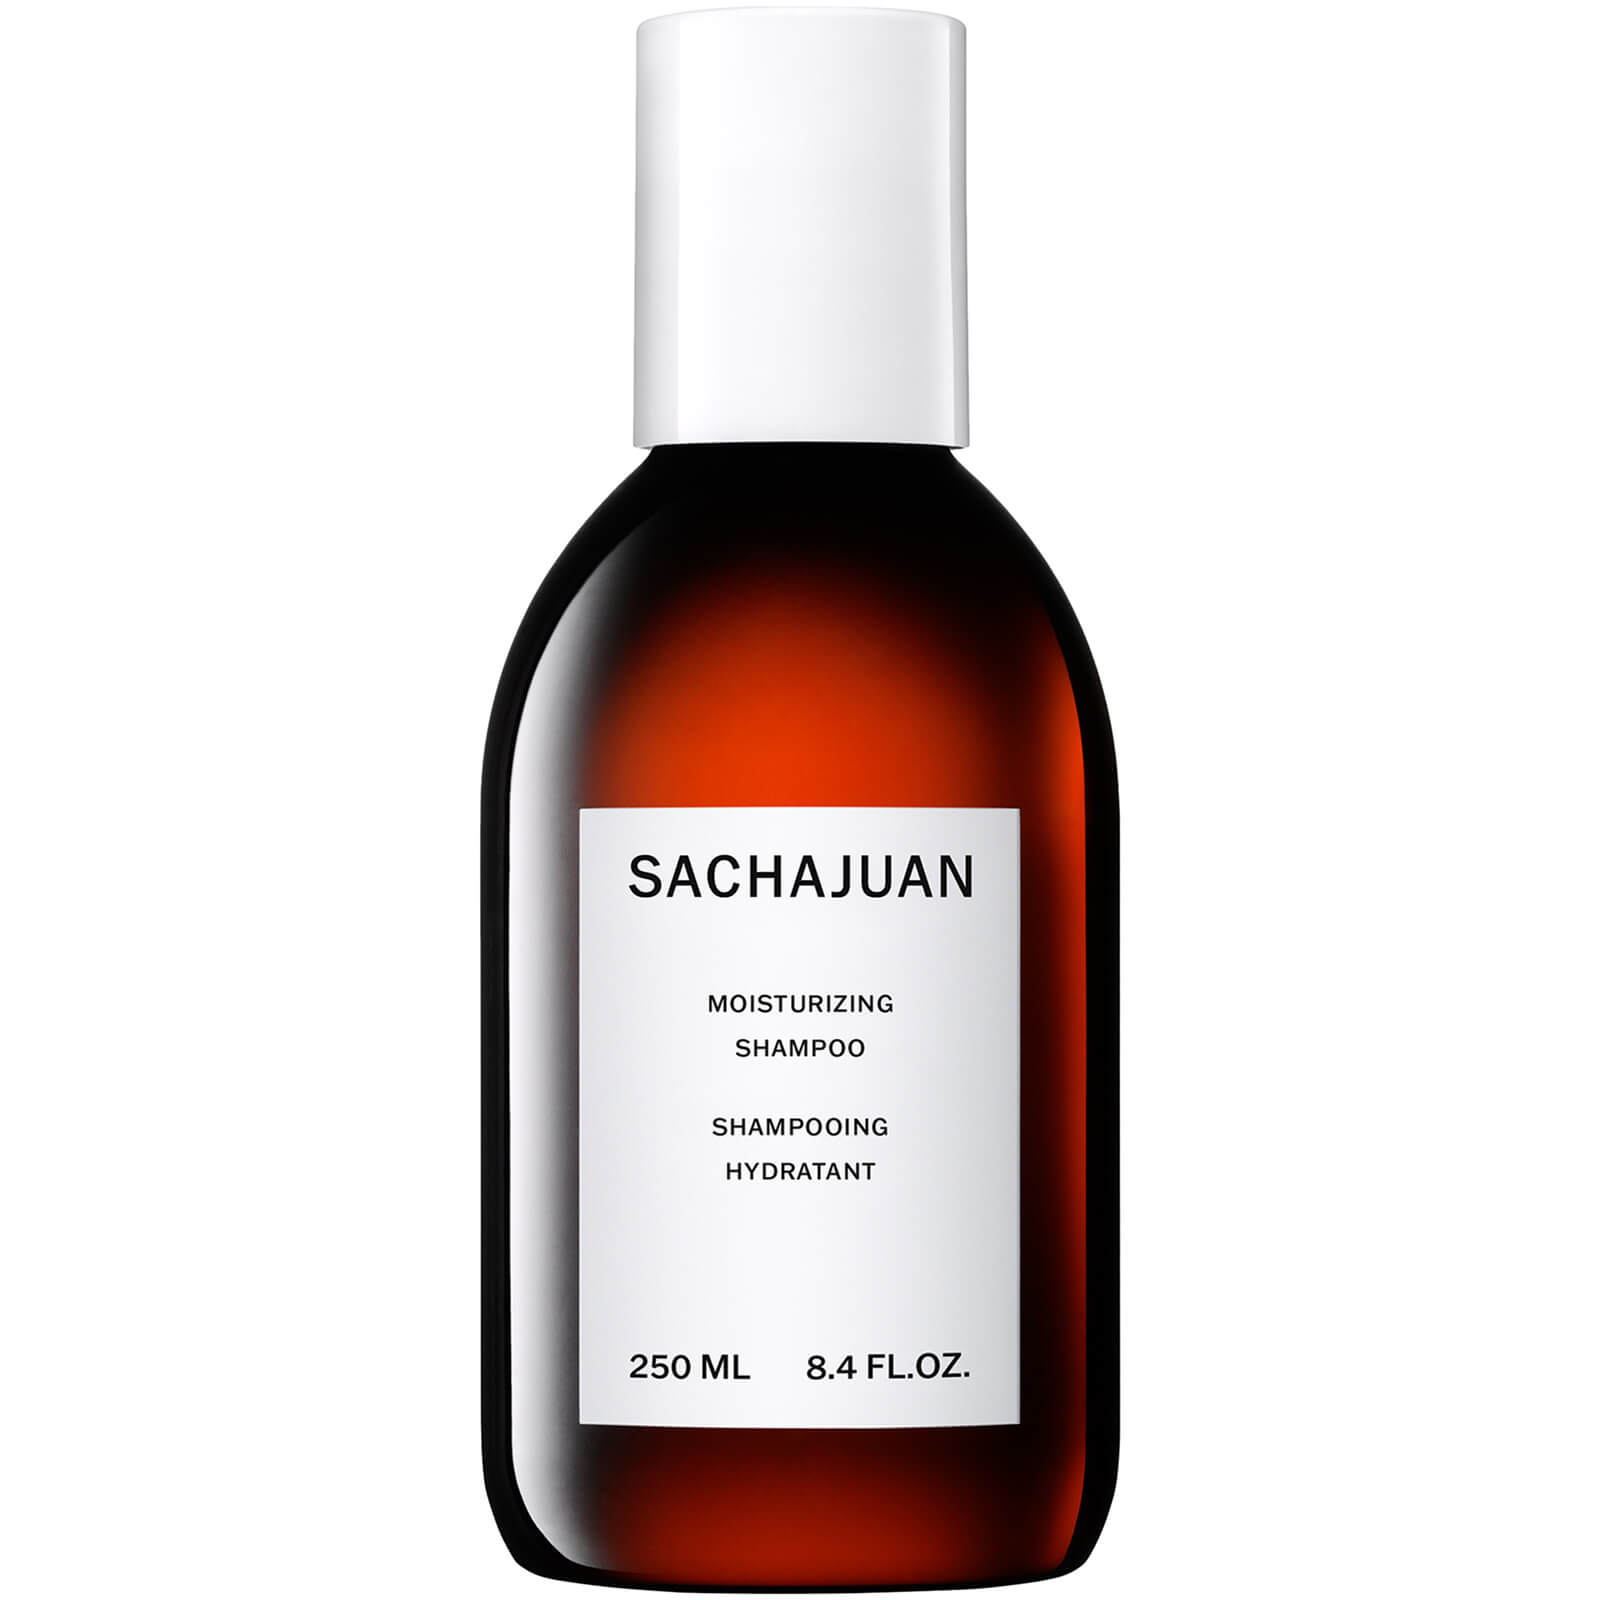 Sachajuan Moisturising Shampoo 250ml product